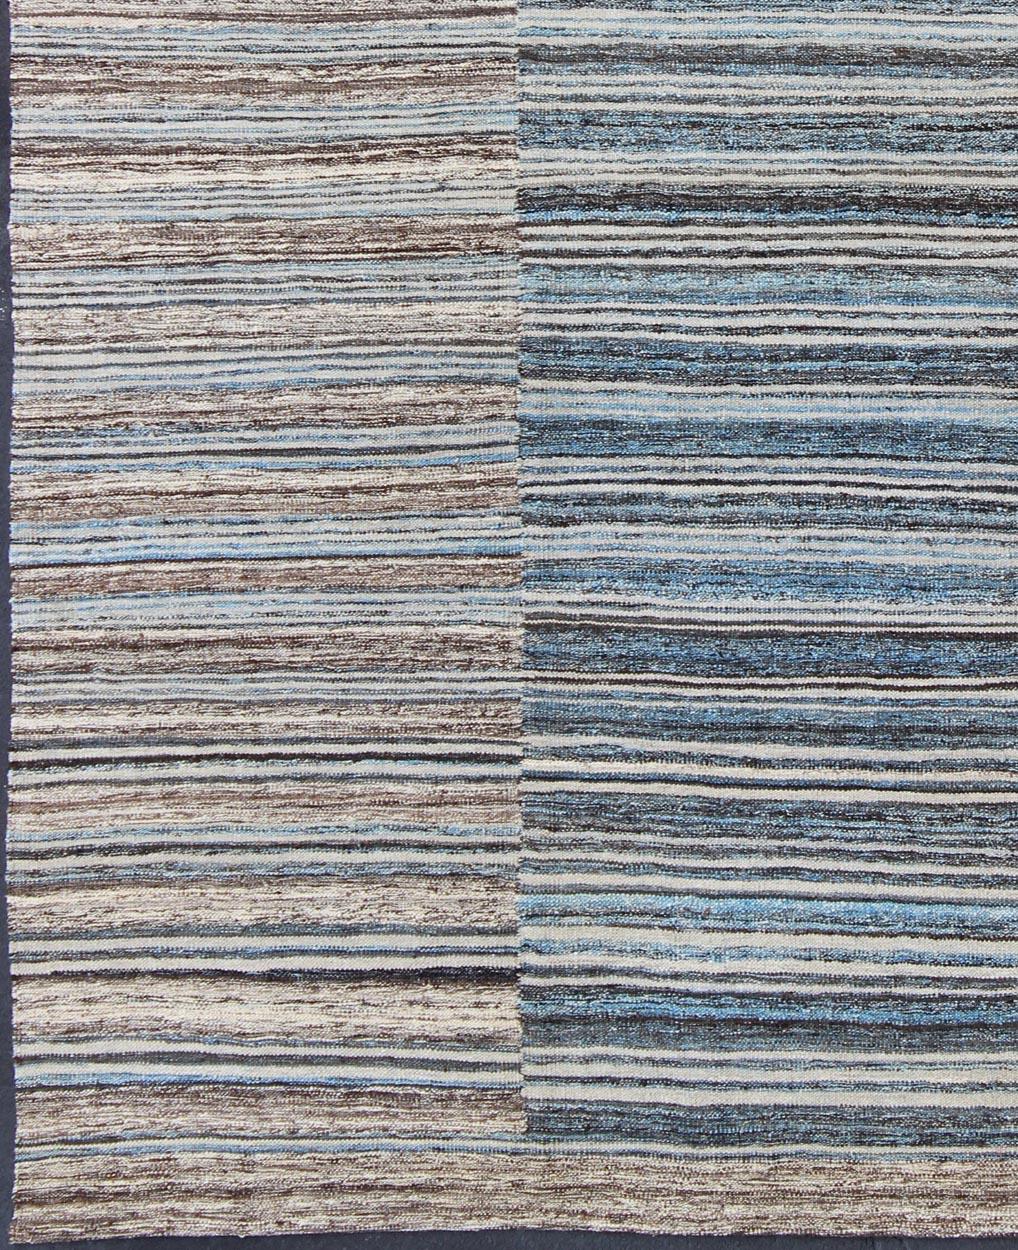 Afghan Flat-Weave Kilim Rug with Classic Stripe Design in Blue, Cream, Brown